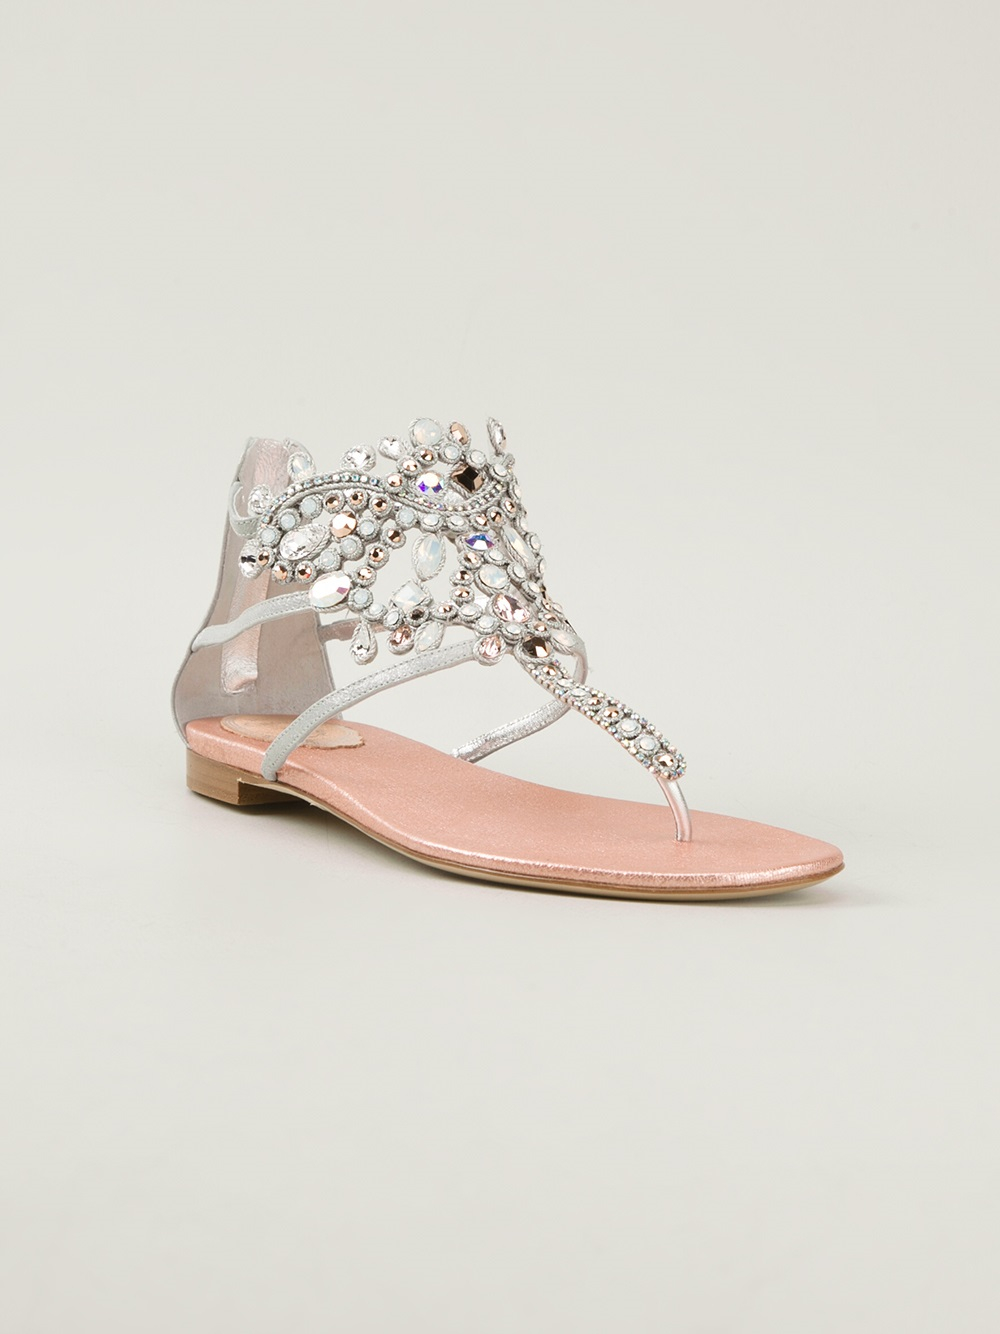 Rene Caovilla Embellished Sandals in Metallic - Lyst